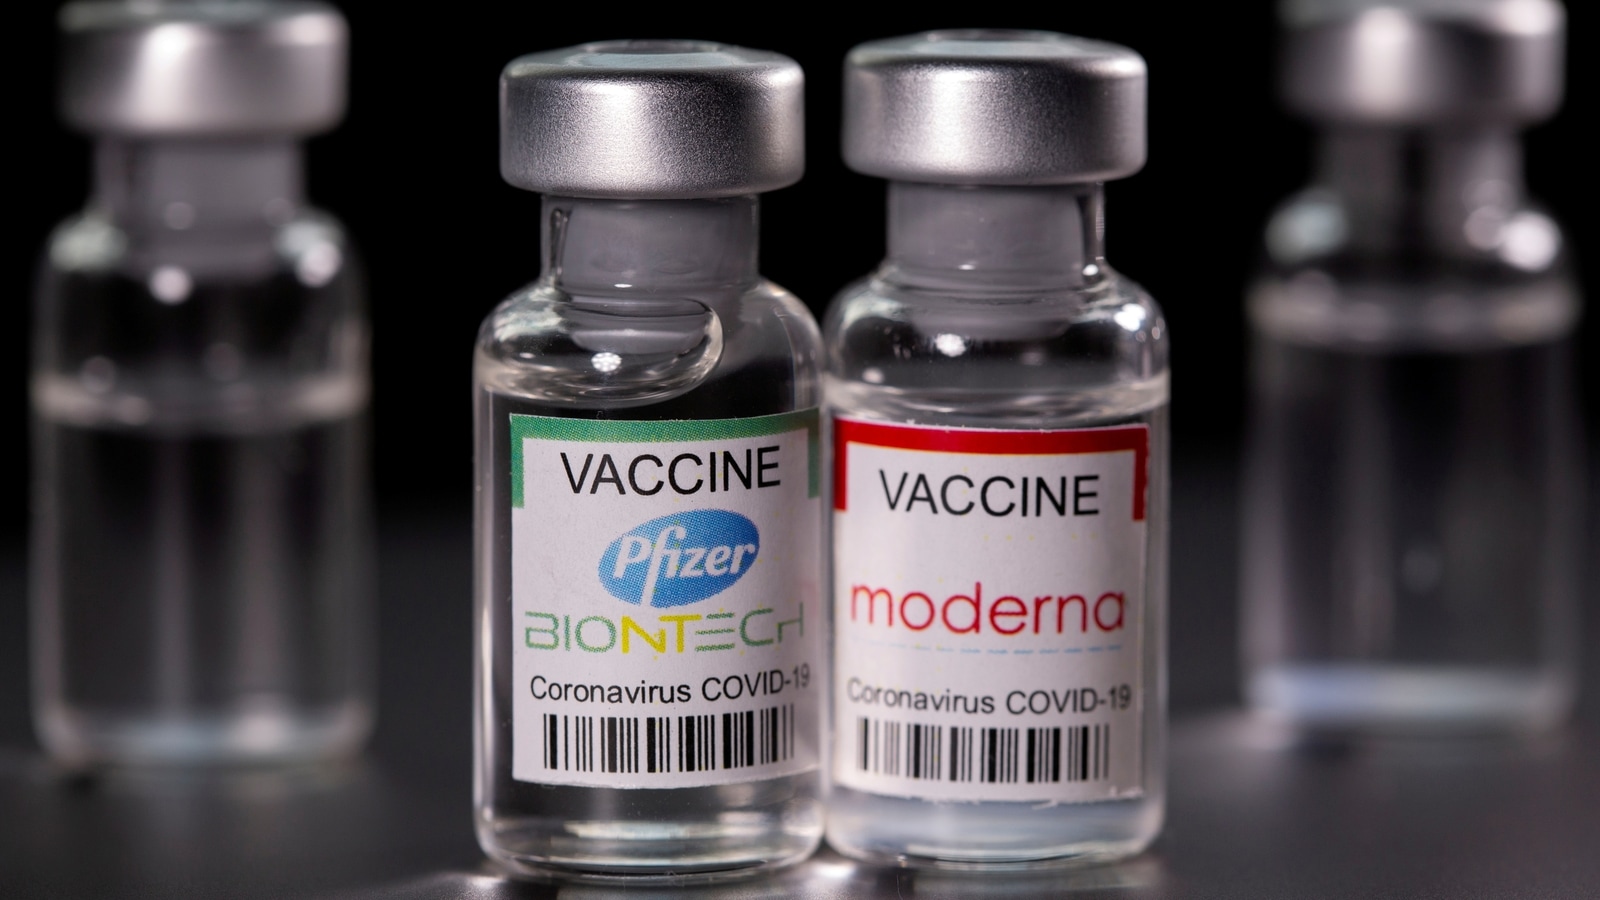 Moderna Vaccine - Spikevax